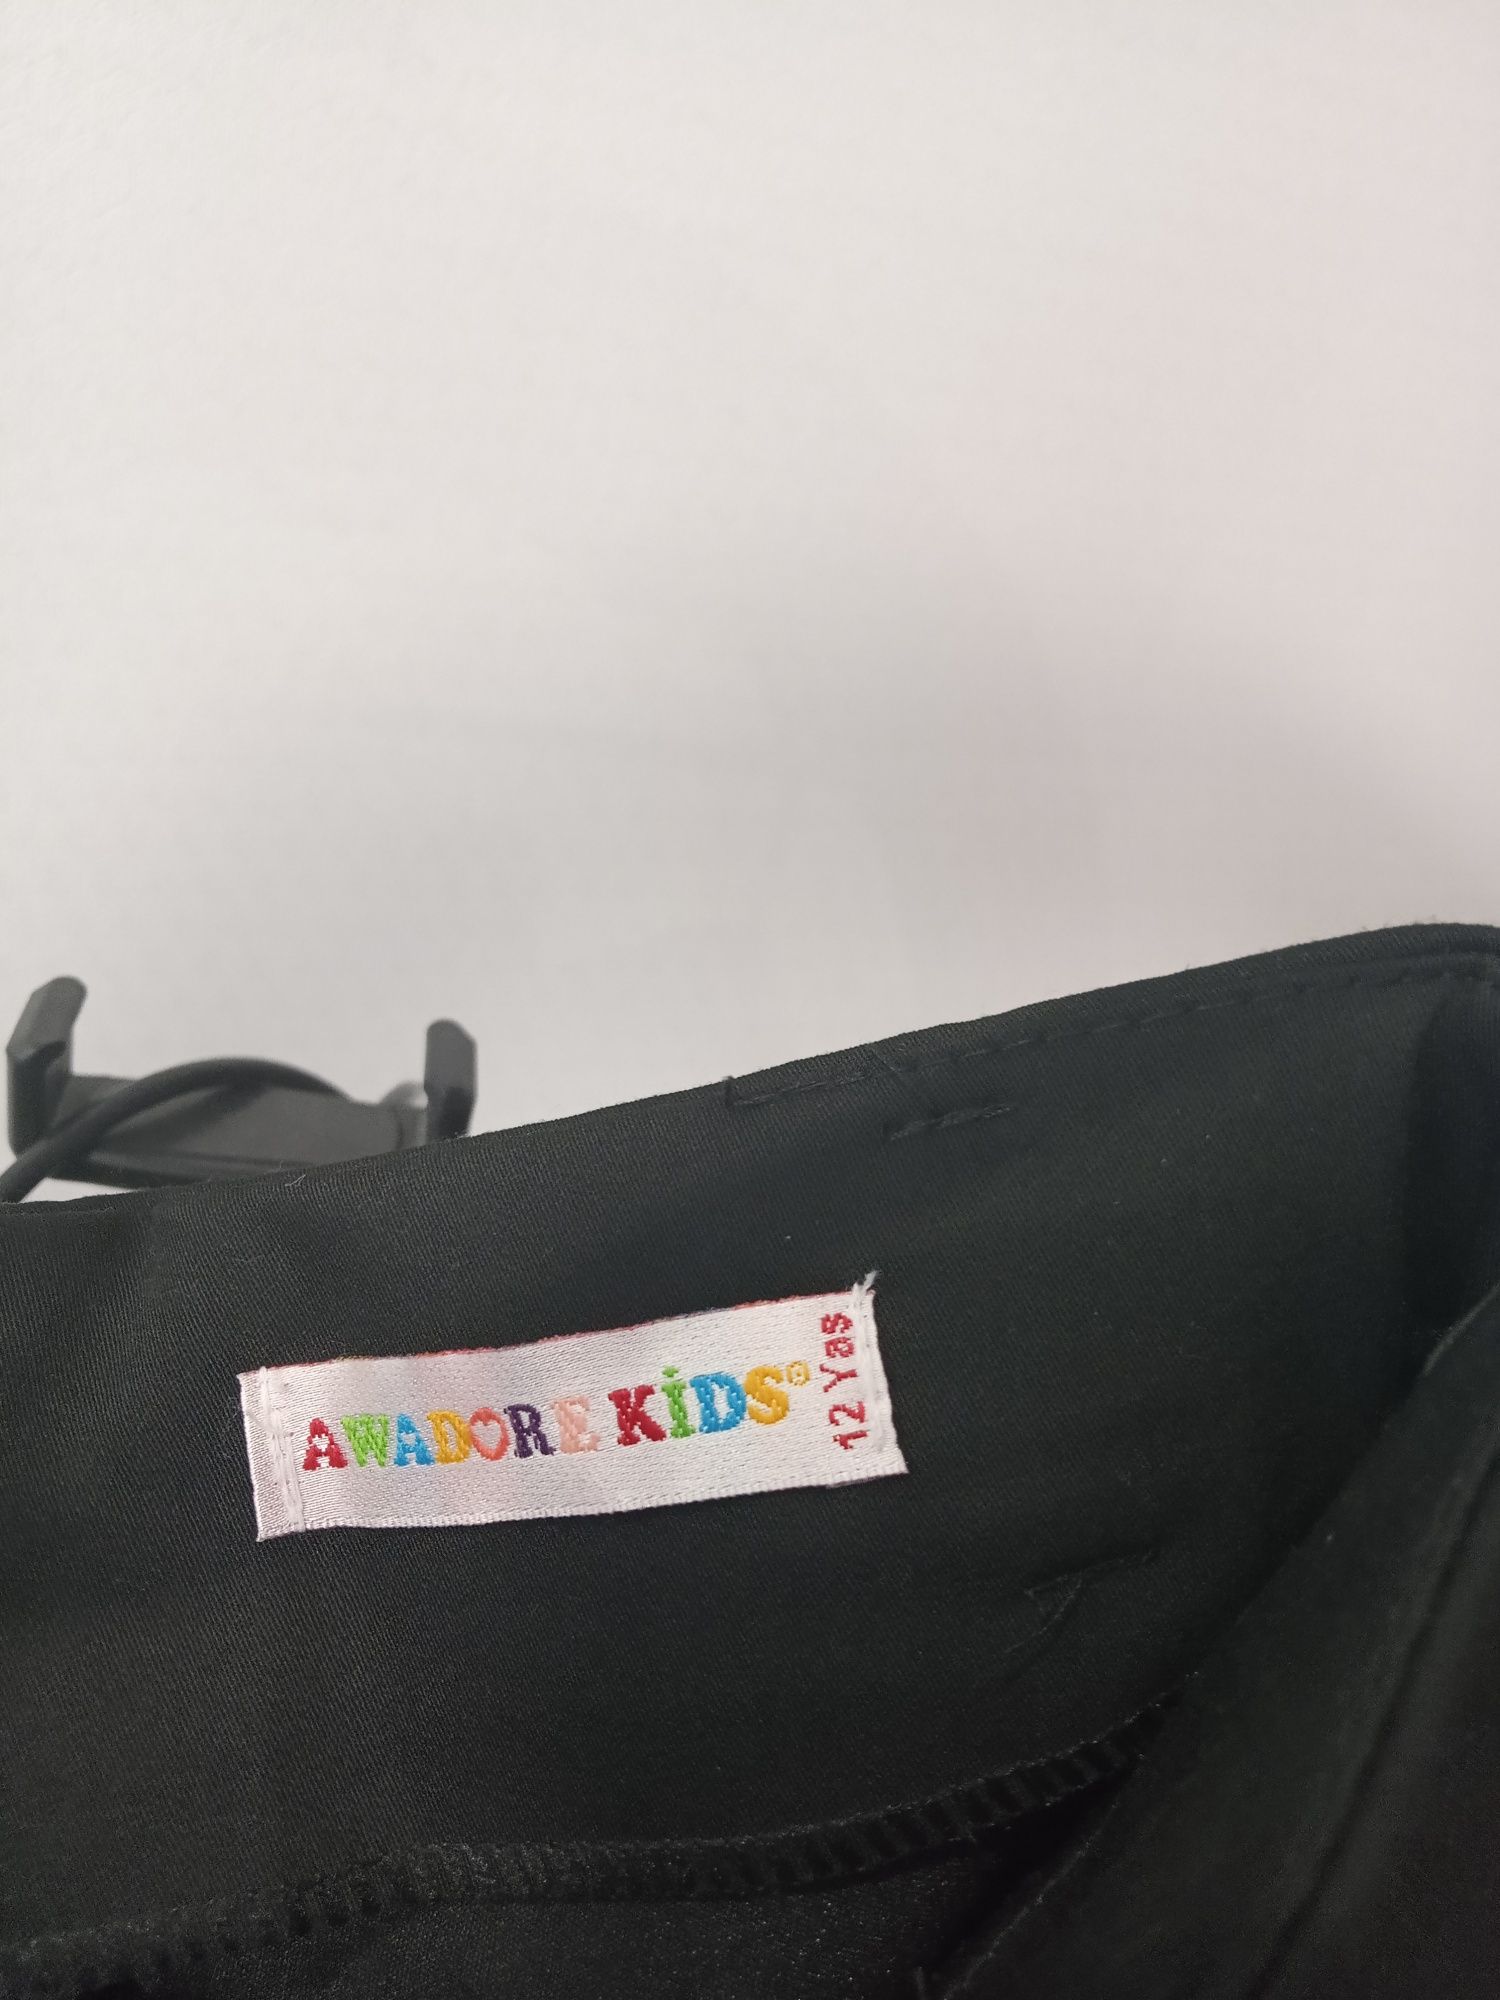 Школьная юбка Awadore Kids 11-12 лет